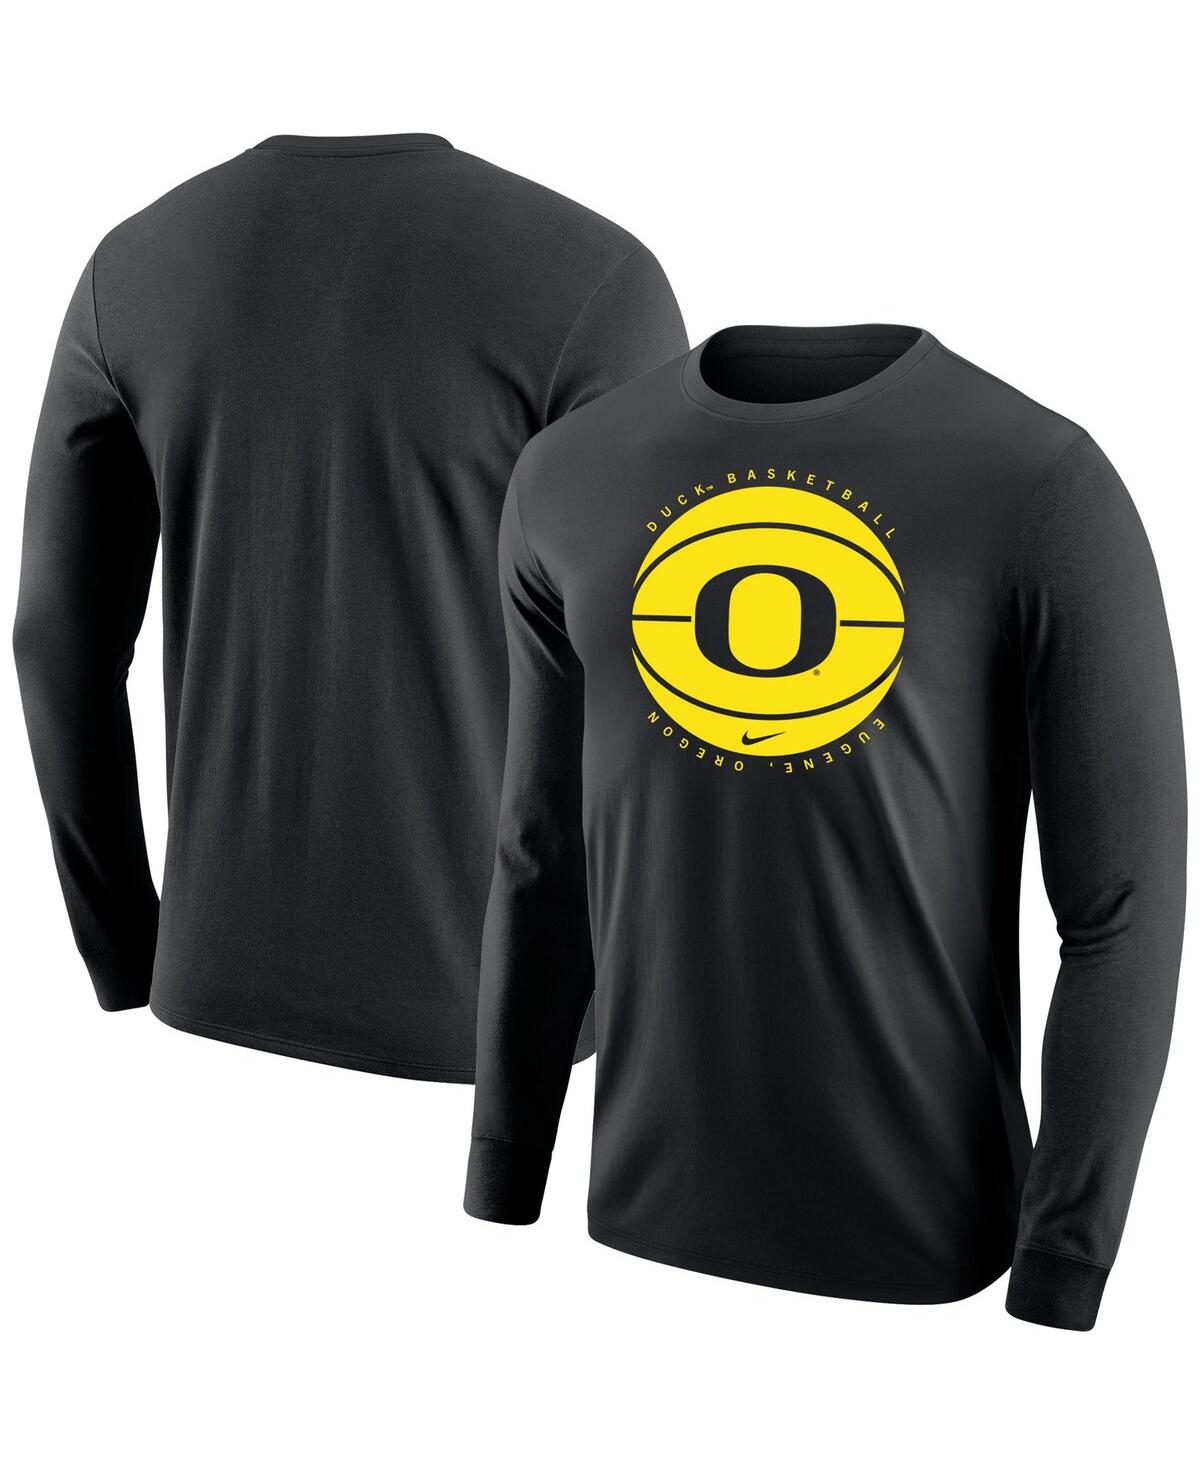 Shop Nike Men's  Black Oregon Ducks Basketball Long Sleeve T-shirt